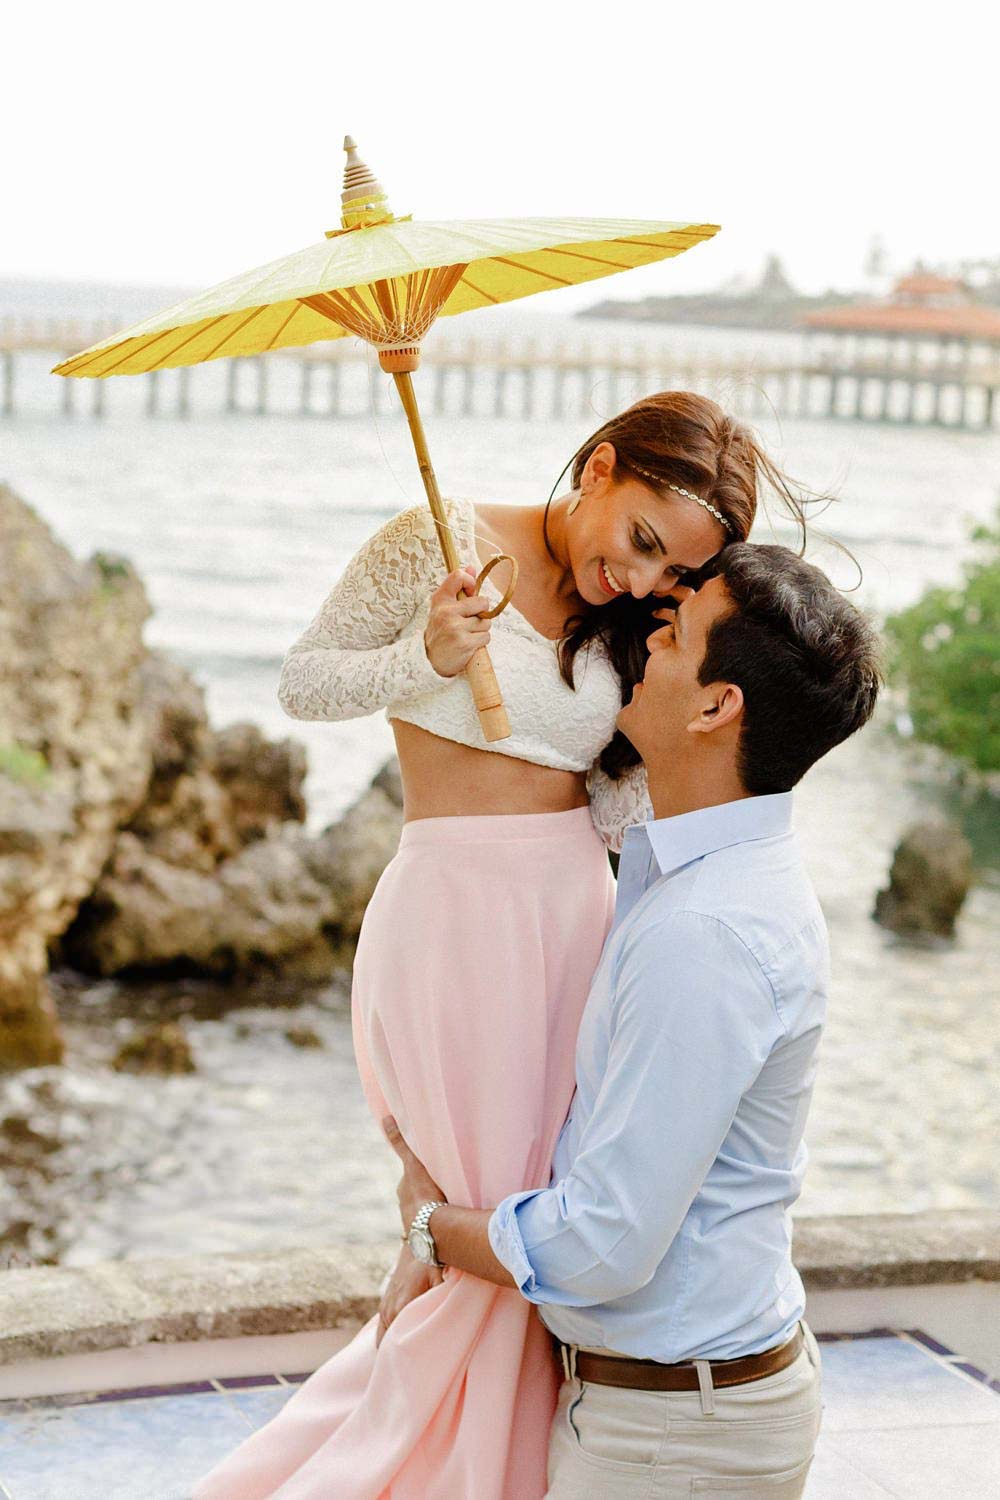 Love story photoshoot: 6 stylish ideas for couple